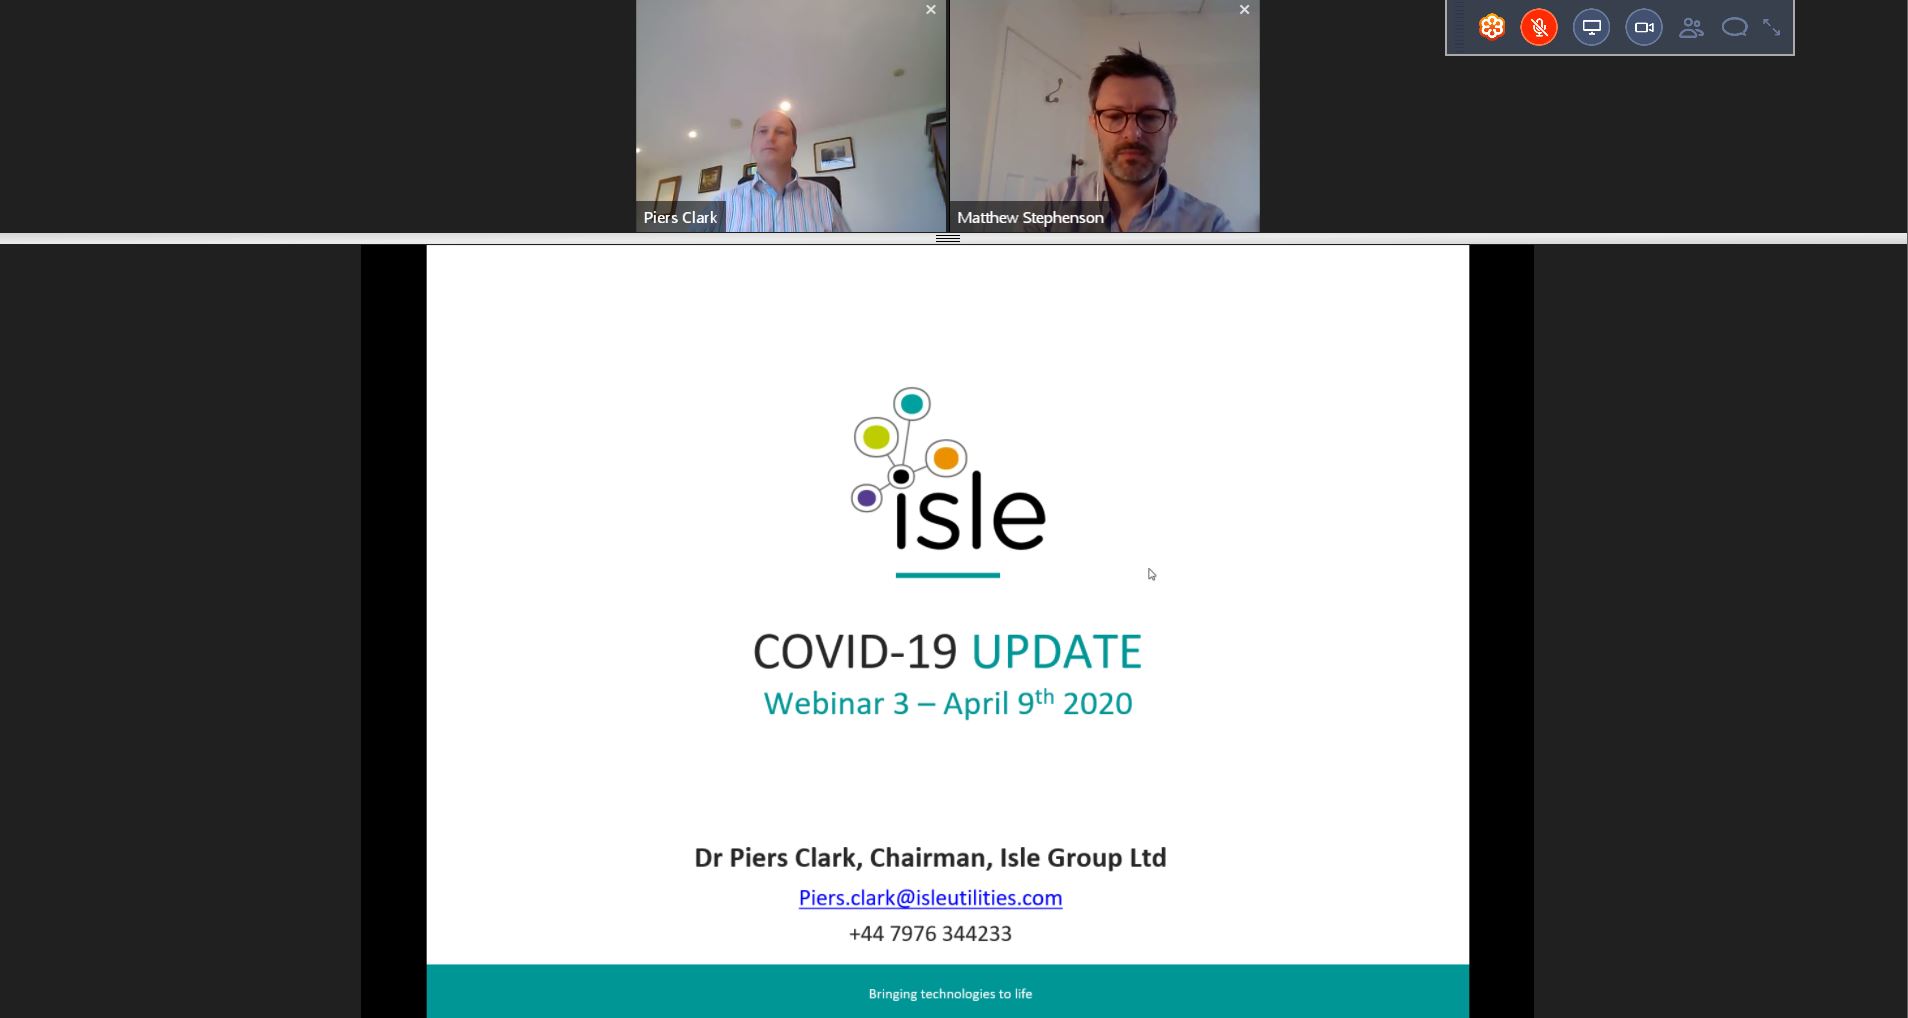 WhatsApp initiative drives international Covid-19 collaboration